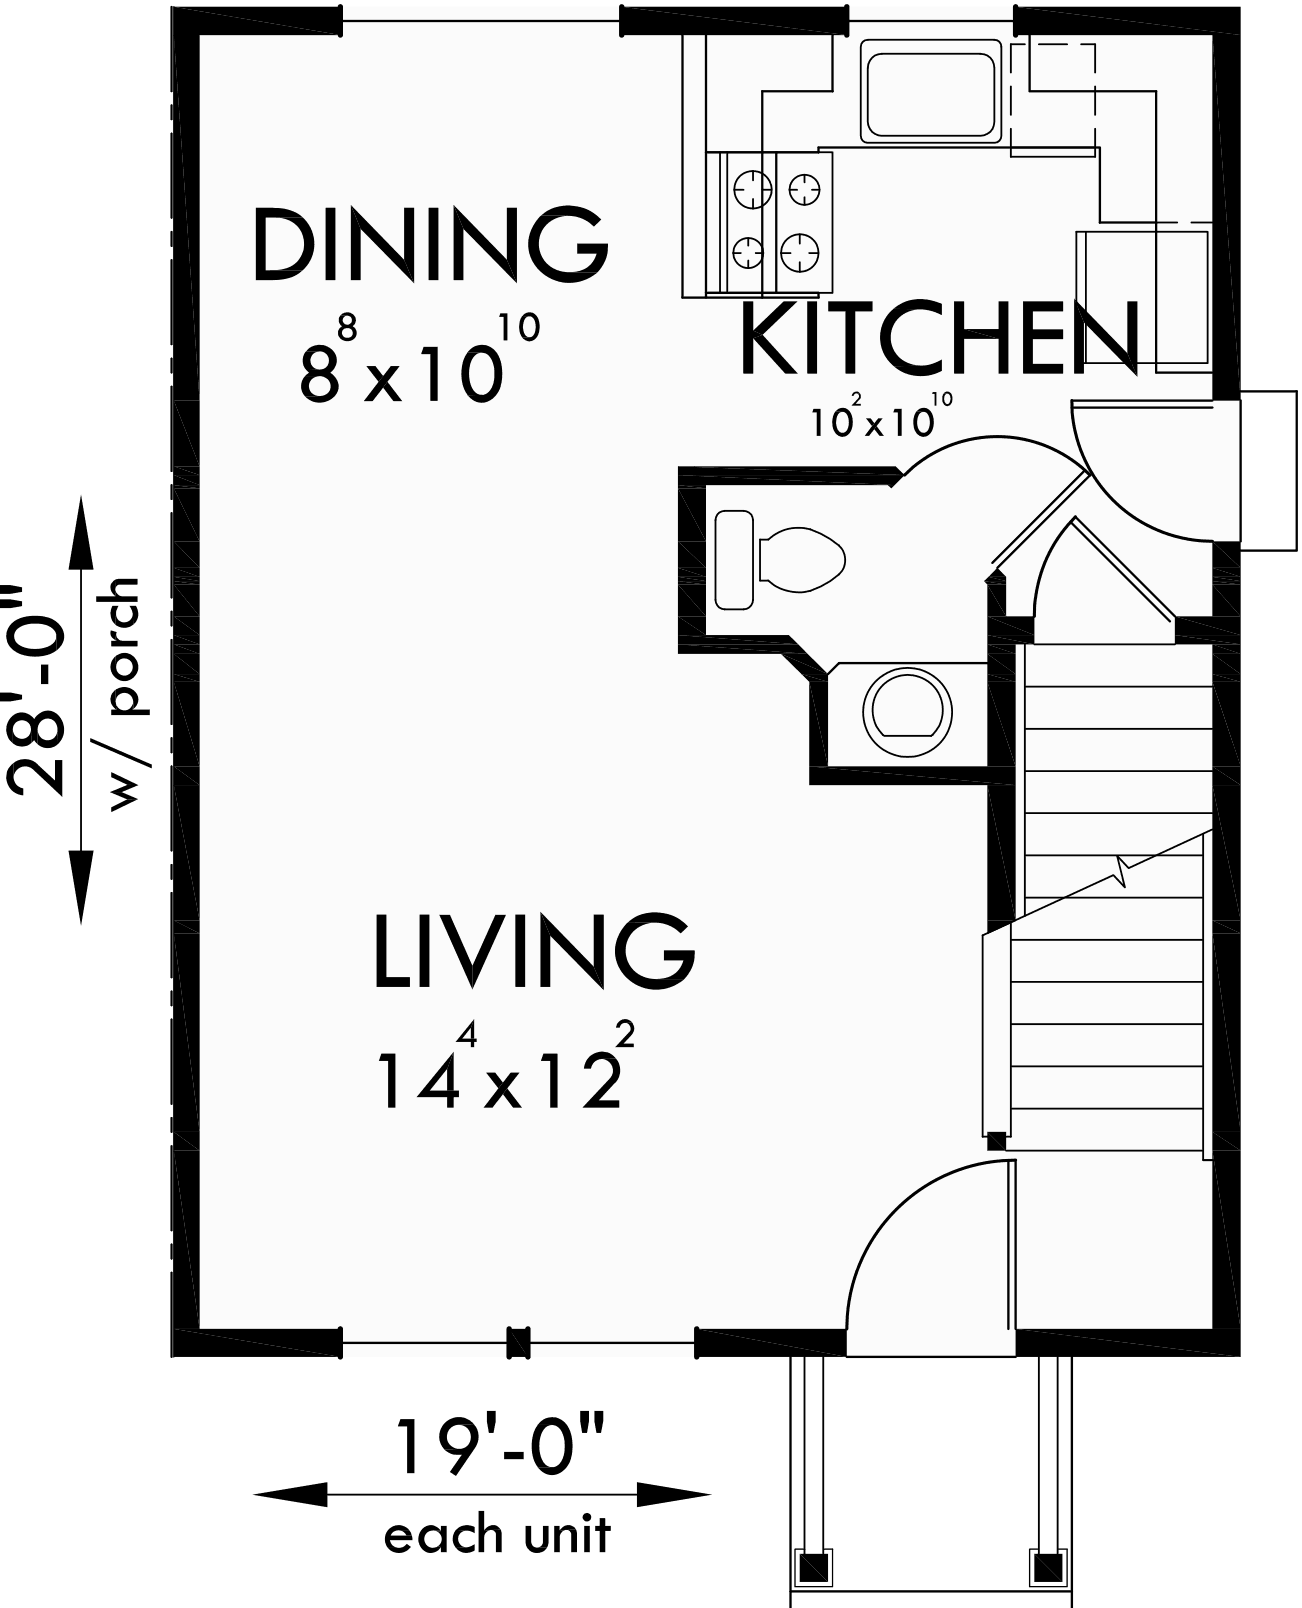 Main Floor Plan for D-553 Duplex house plans, small duplex house plans, duplex house plans with basement, D-553